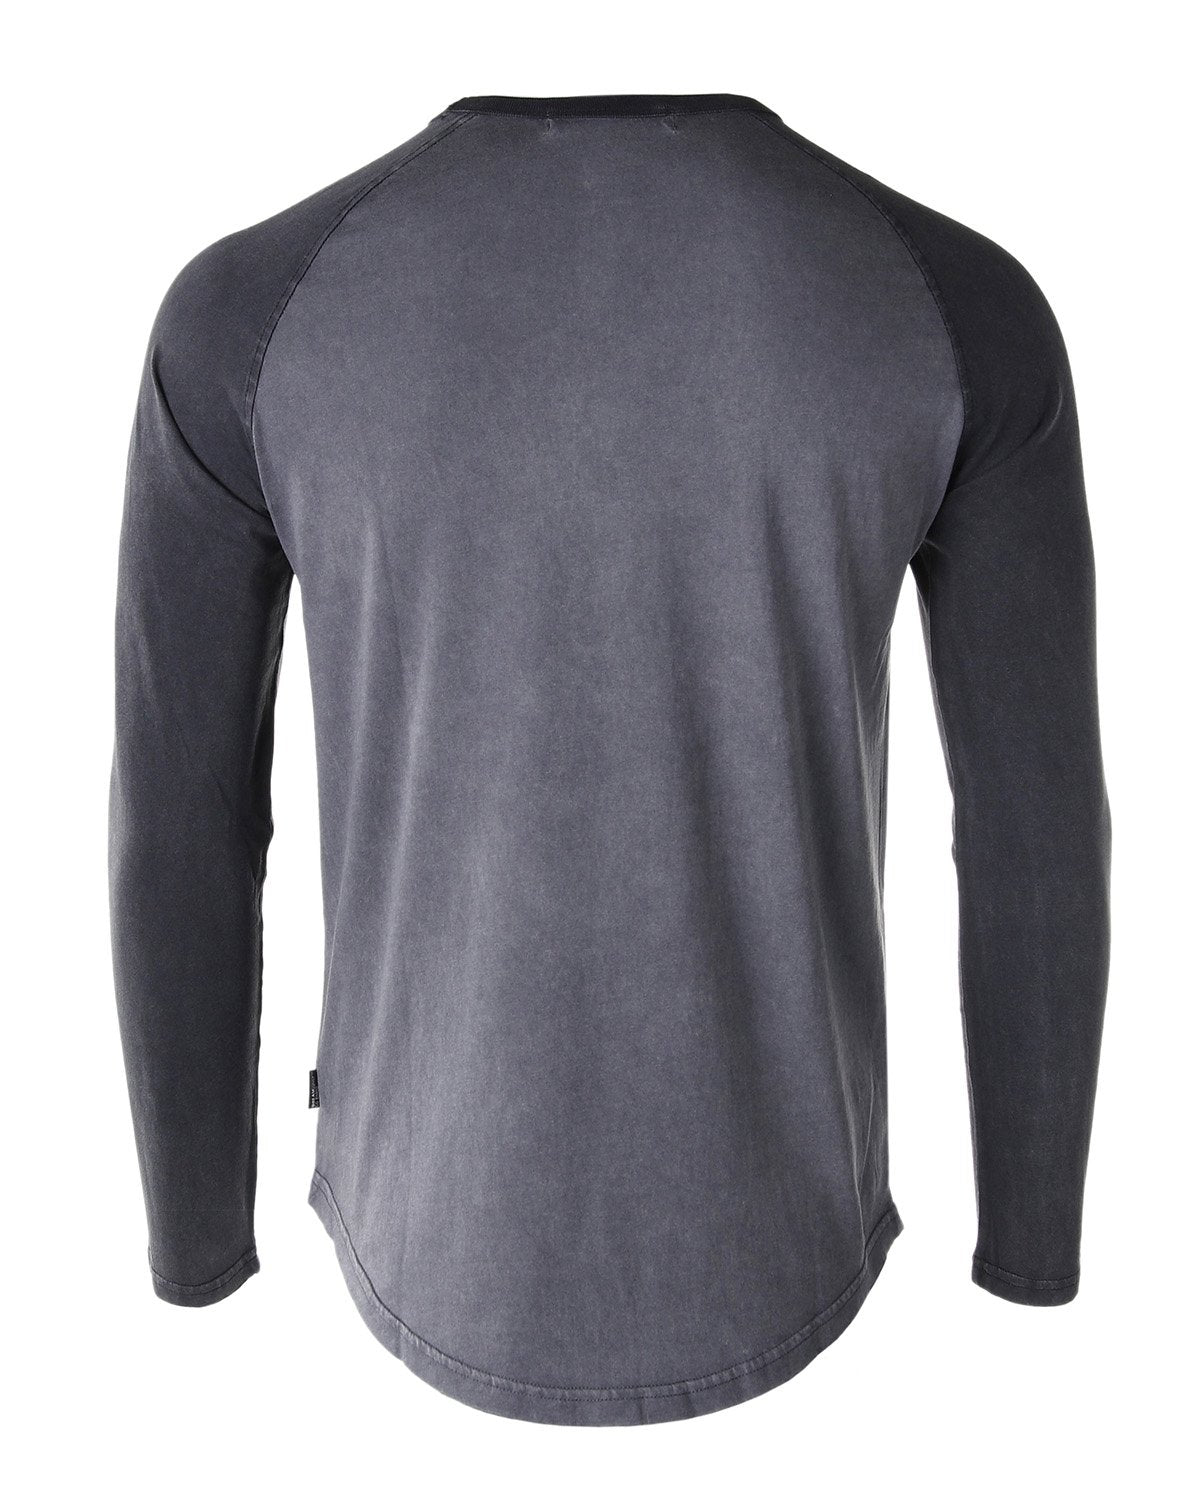 Men's Athletic Fit Baseball Retro Contrast Long Sleeve Raglan T-Shirt